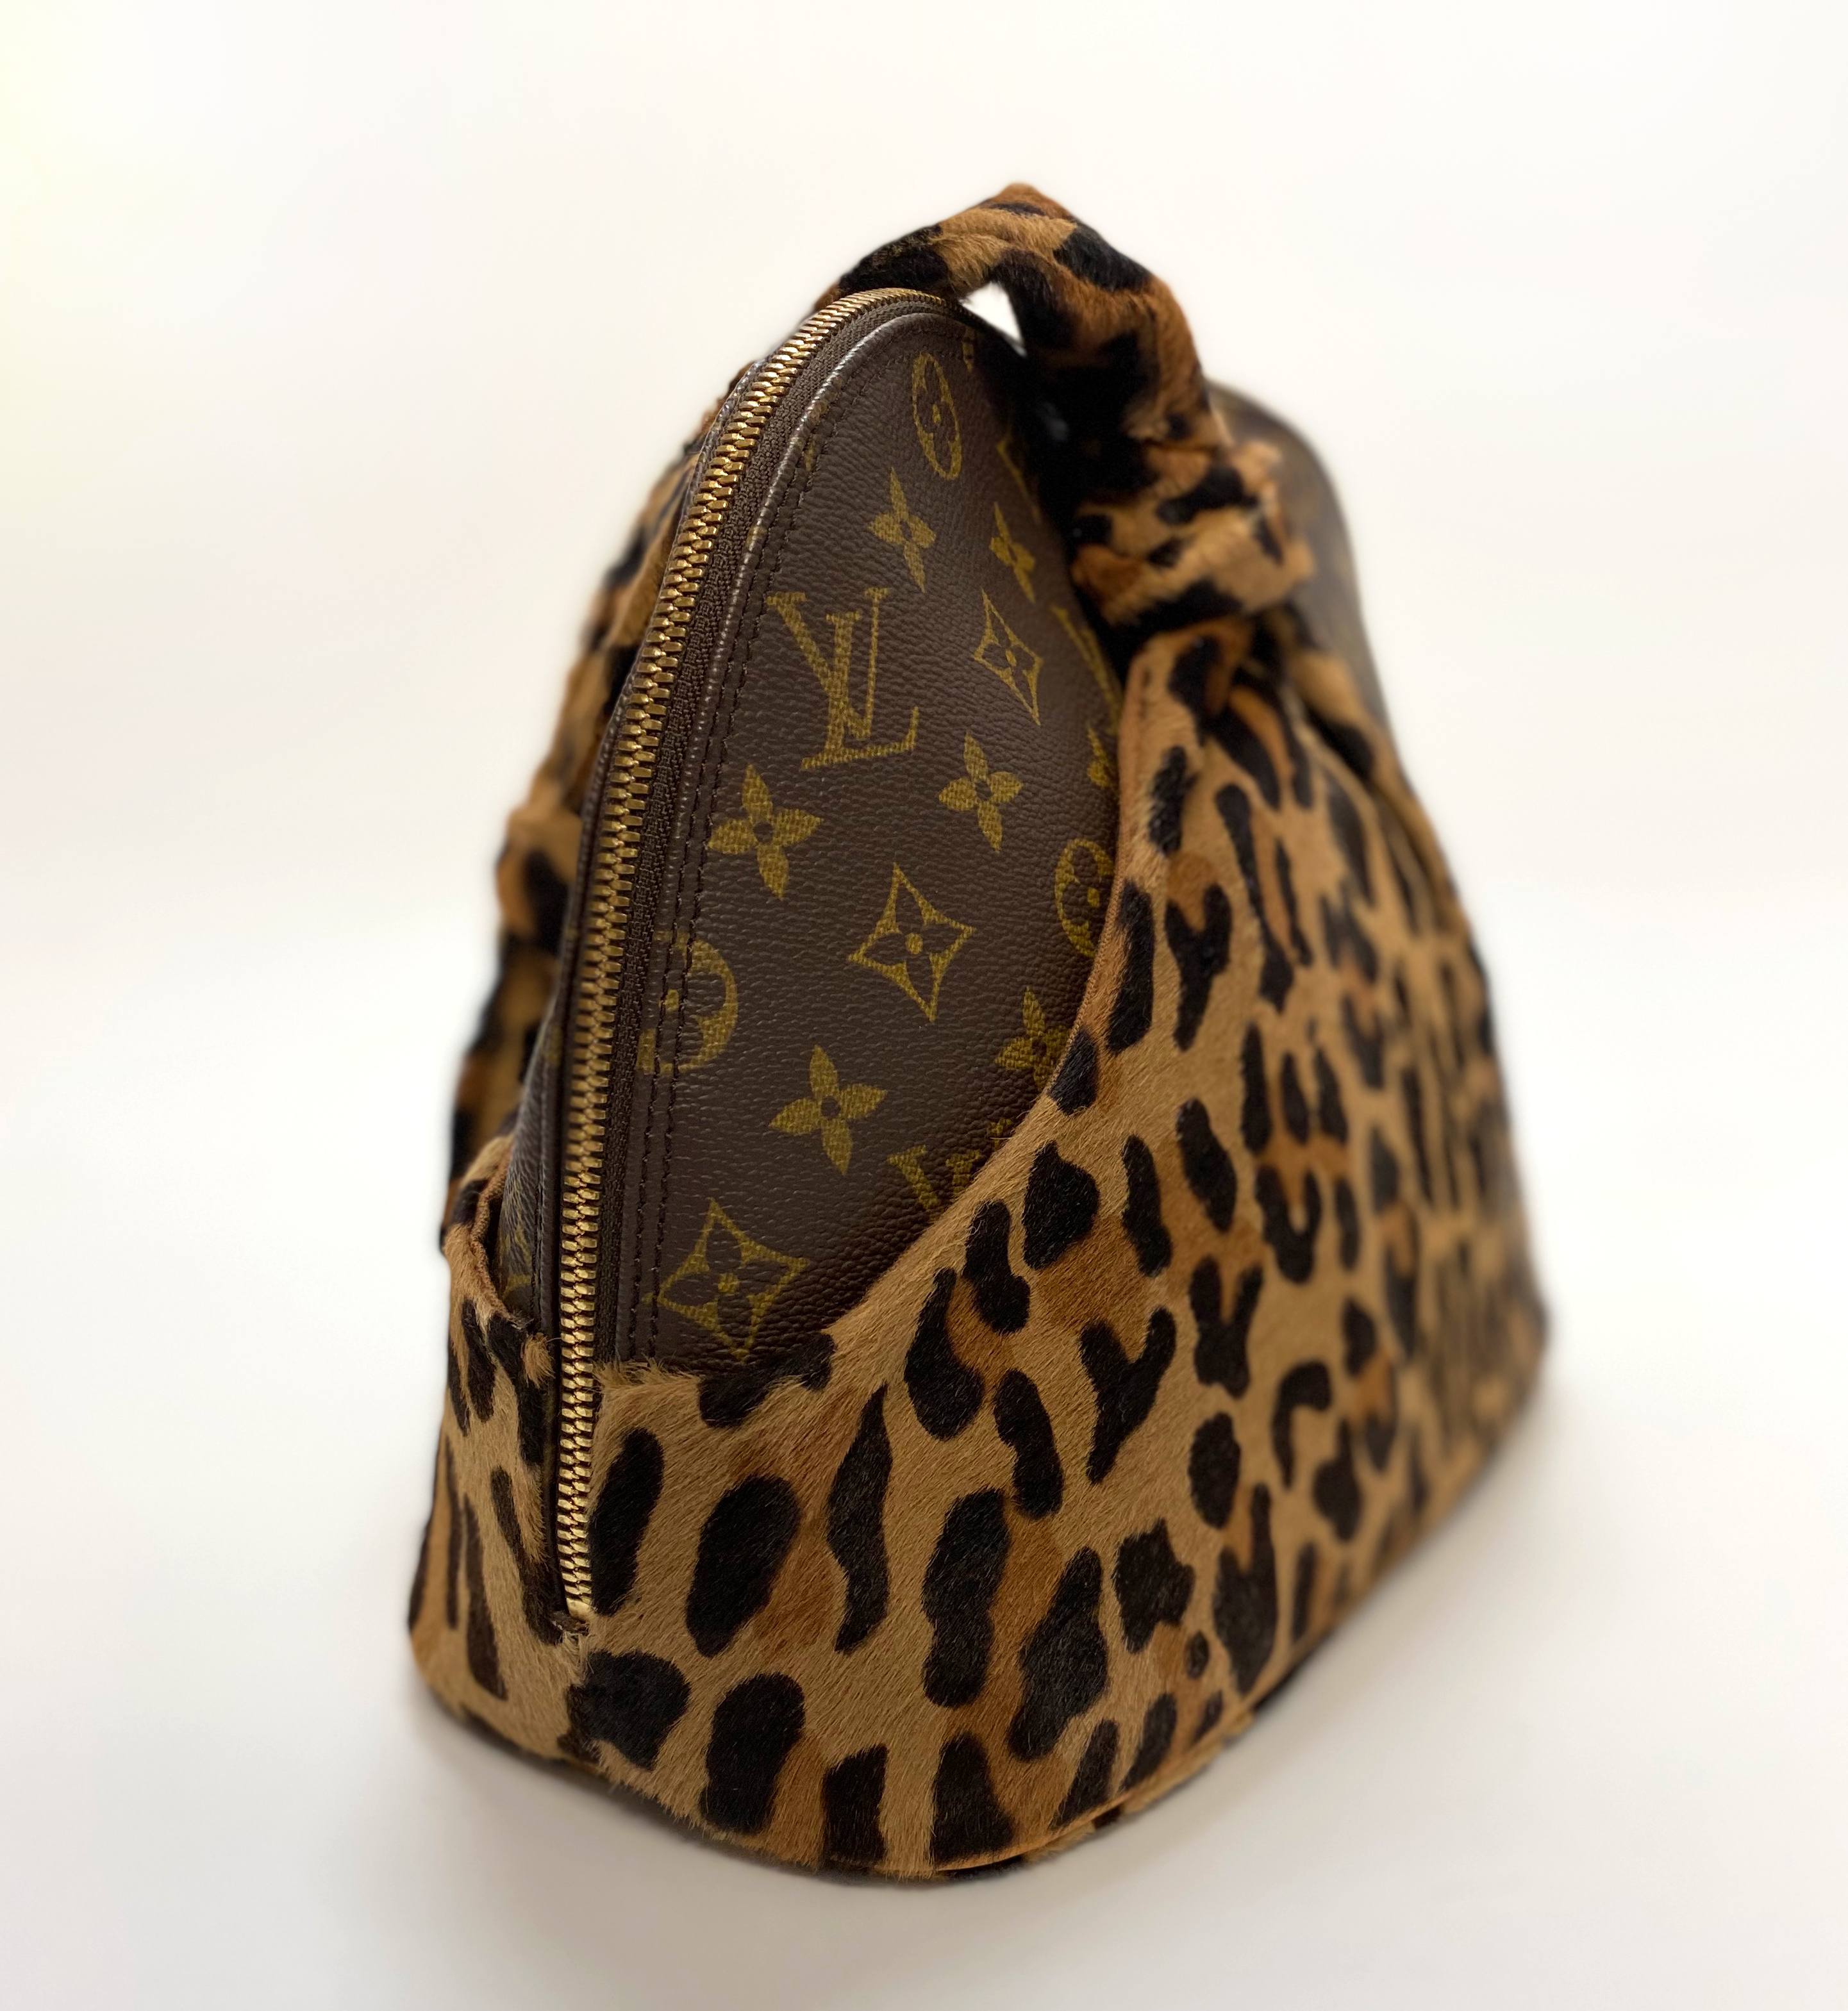 Louis Vuitton x Azzedine Alaia 'Centenaire' Leopard Alma Bag